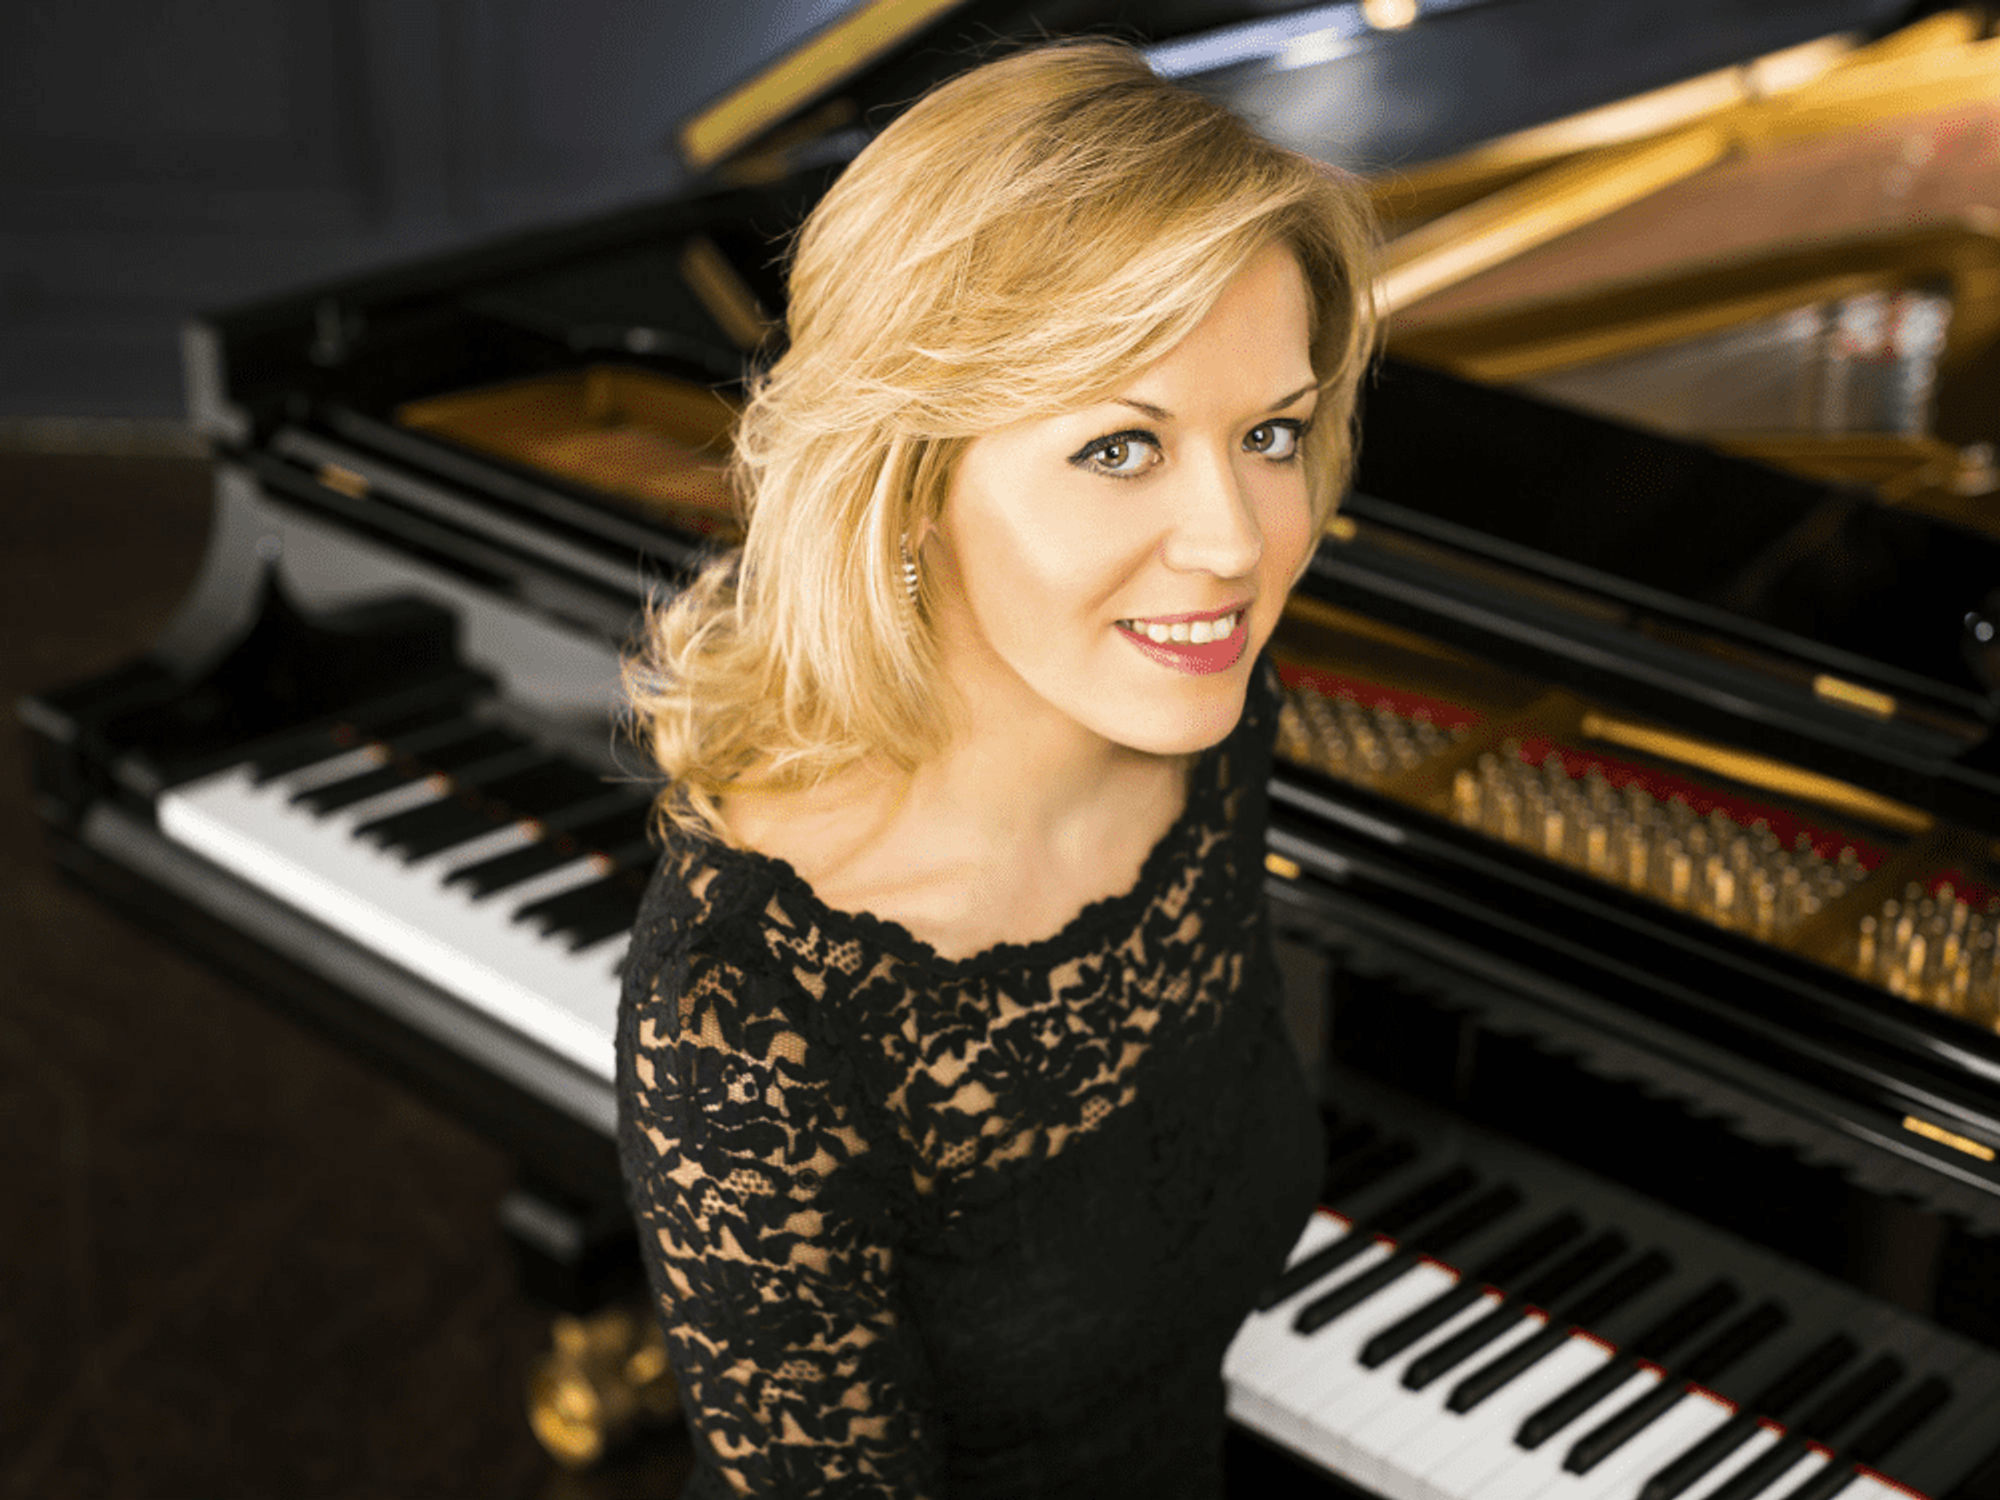 Van Cliburn Gold Medal pianist Olga Kern will perform during the three-day KMFA virtual grand opening celebration.